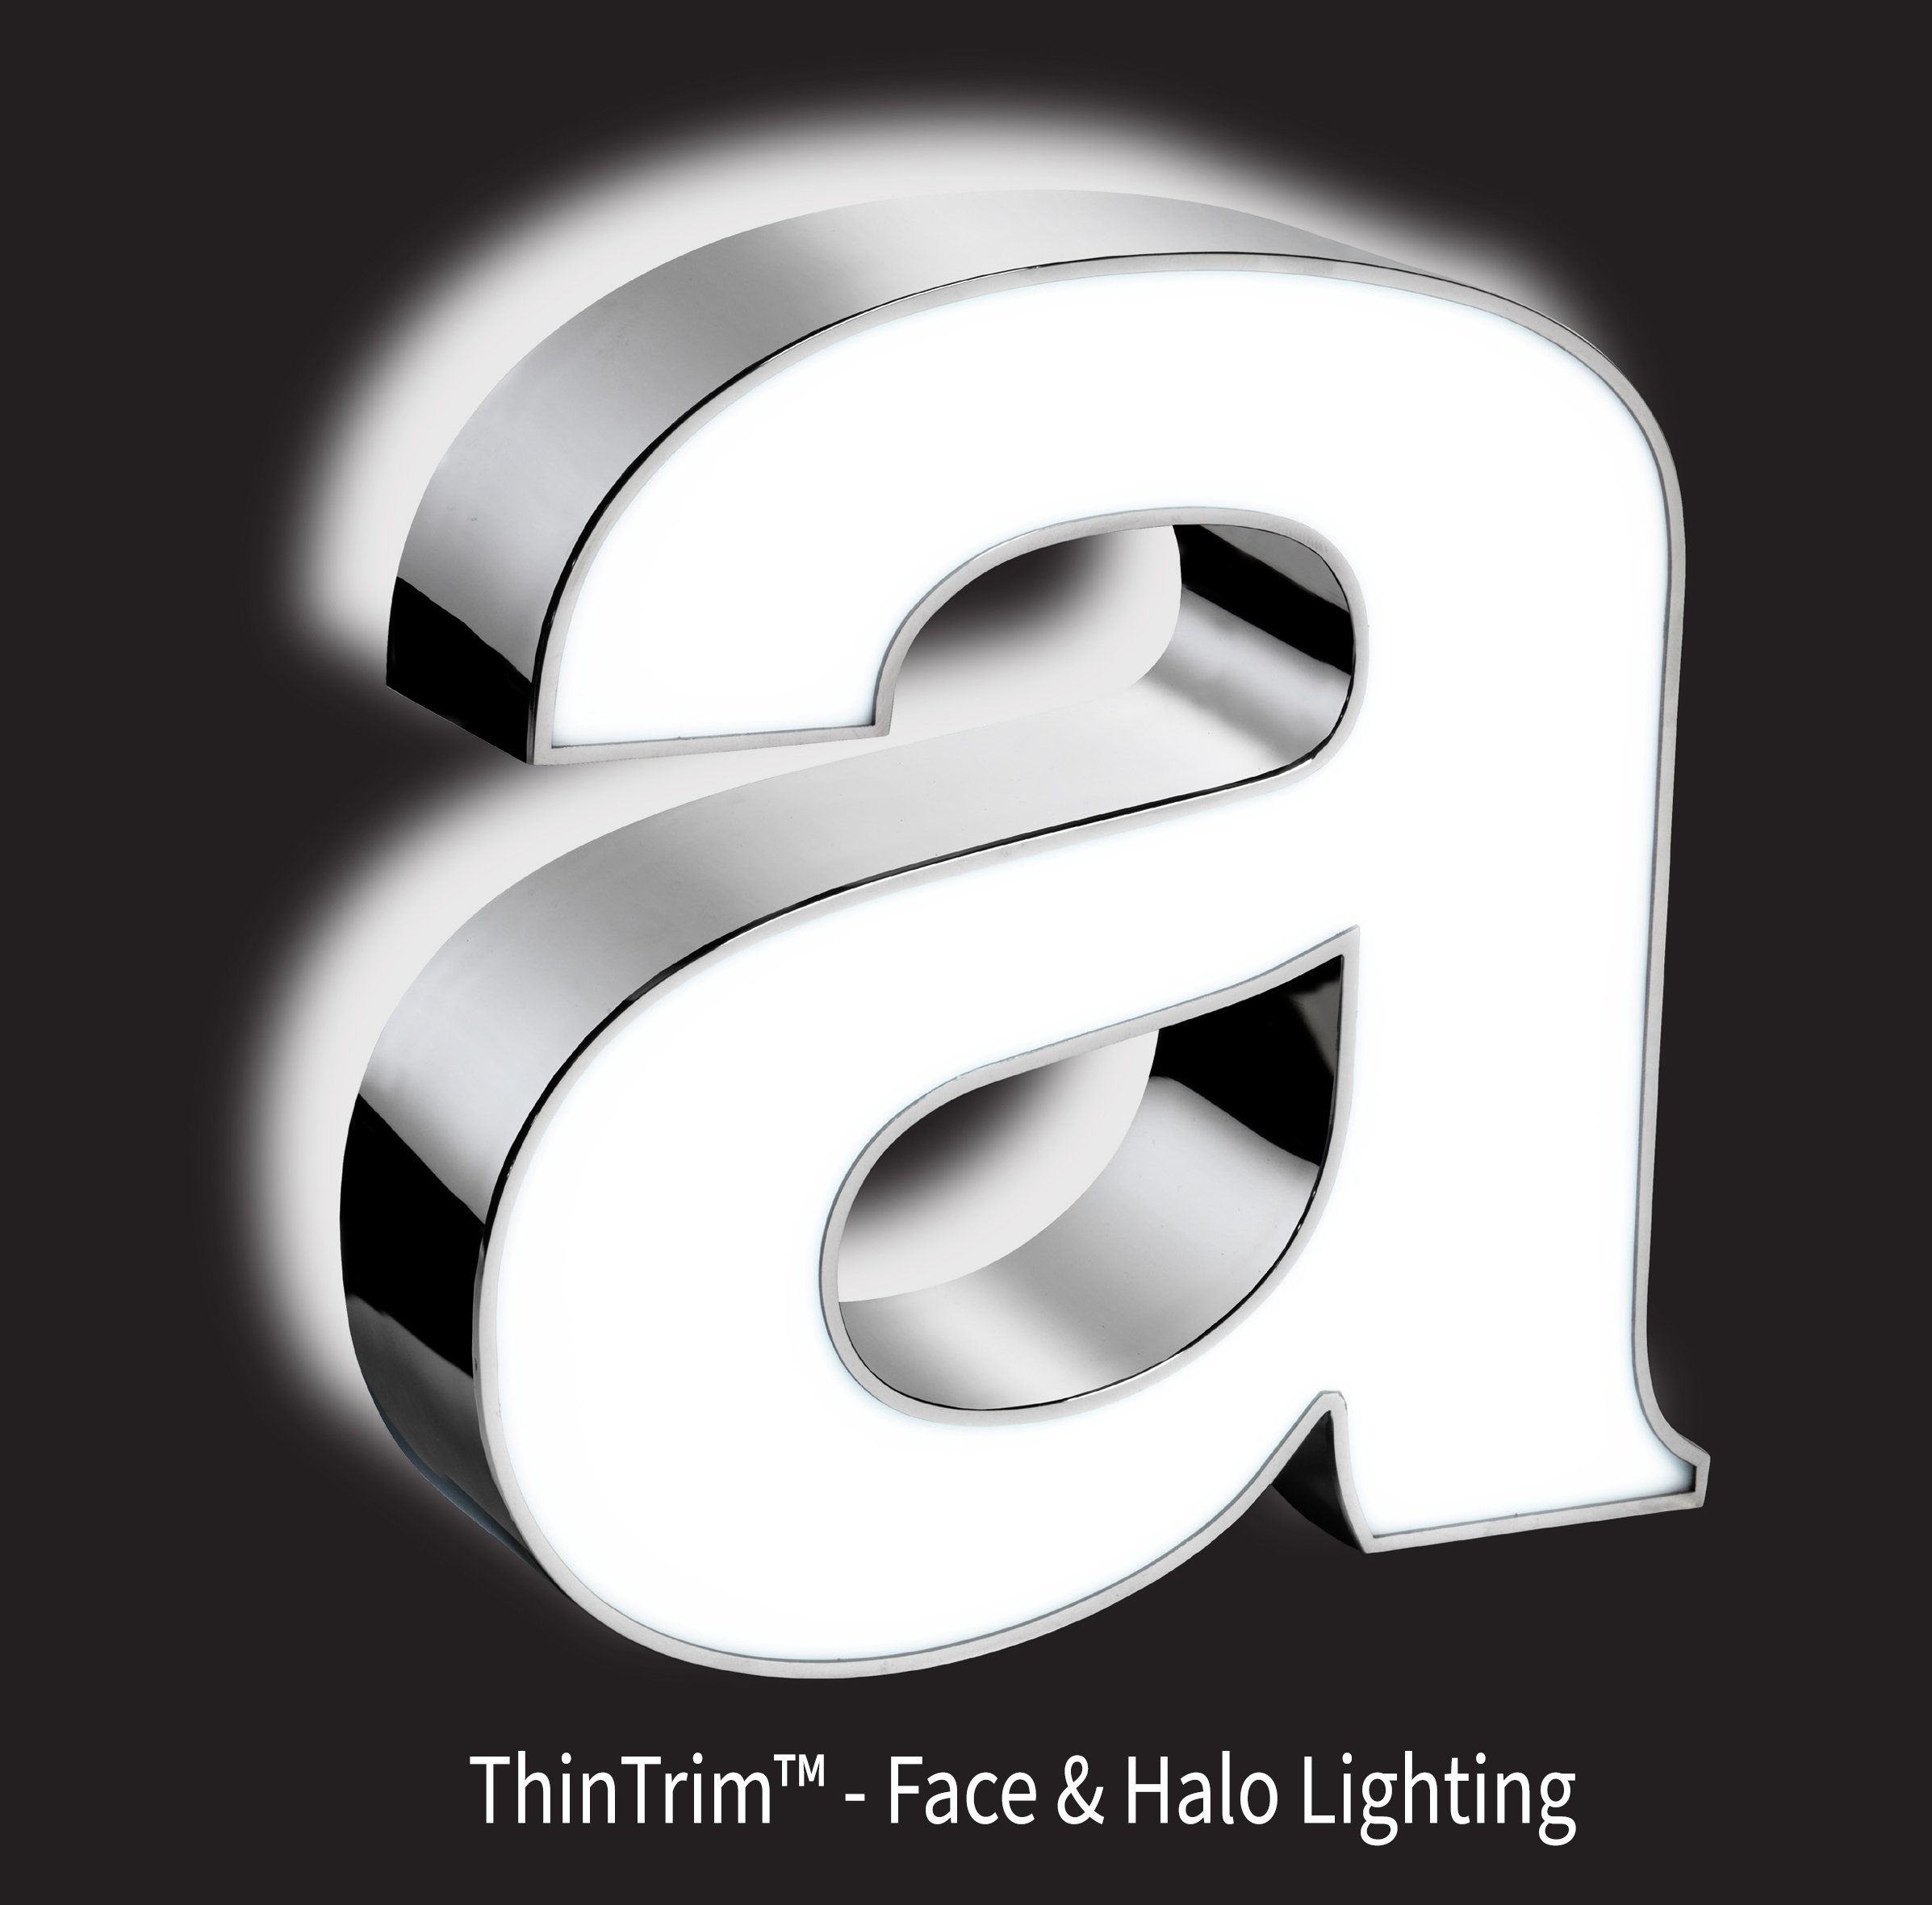 Illuminated_ThinTrim_Face-Halo_Lit_WORDS.jpg